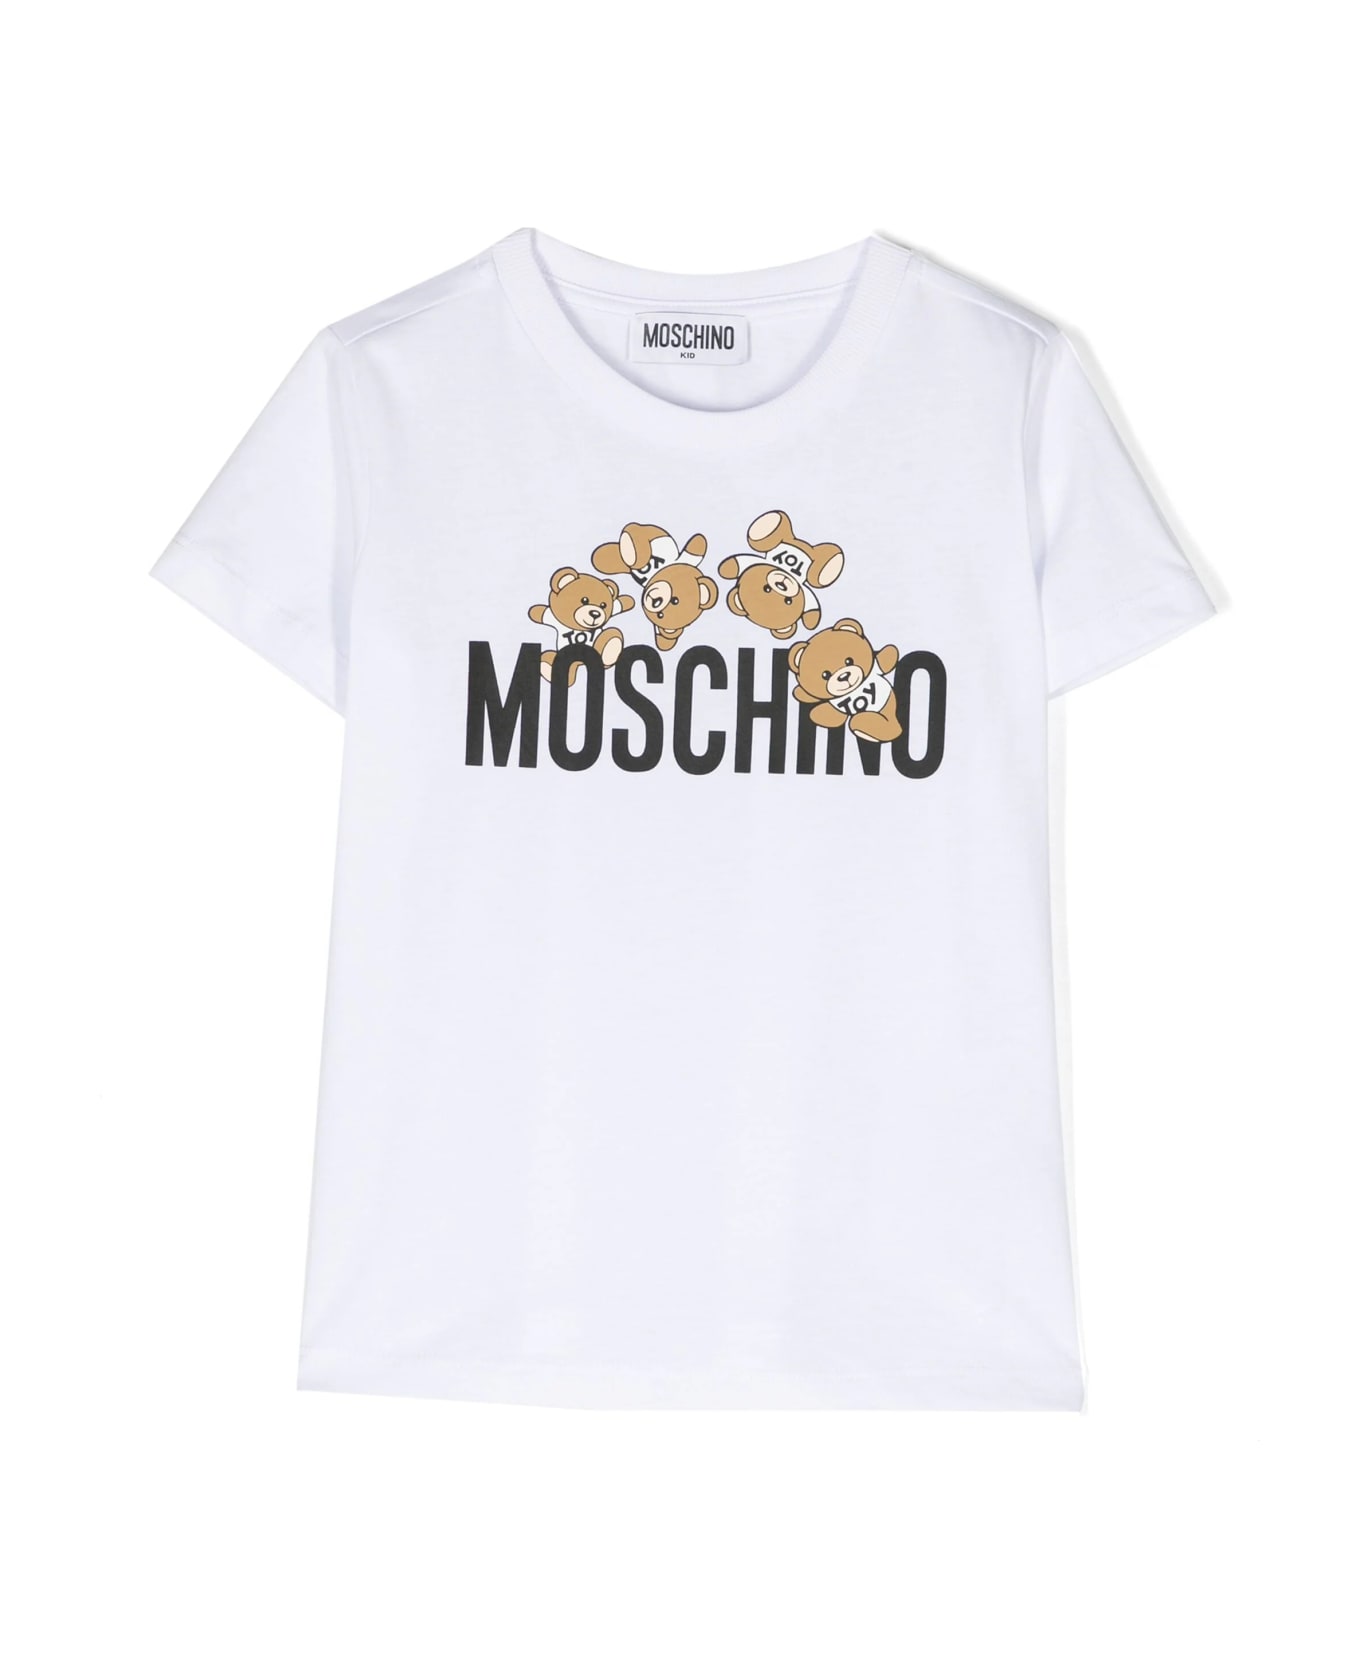 Moschino White T-shirt With Moschino Teddy Friends Print - White